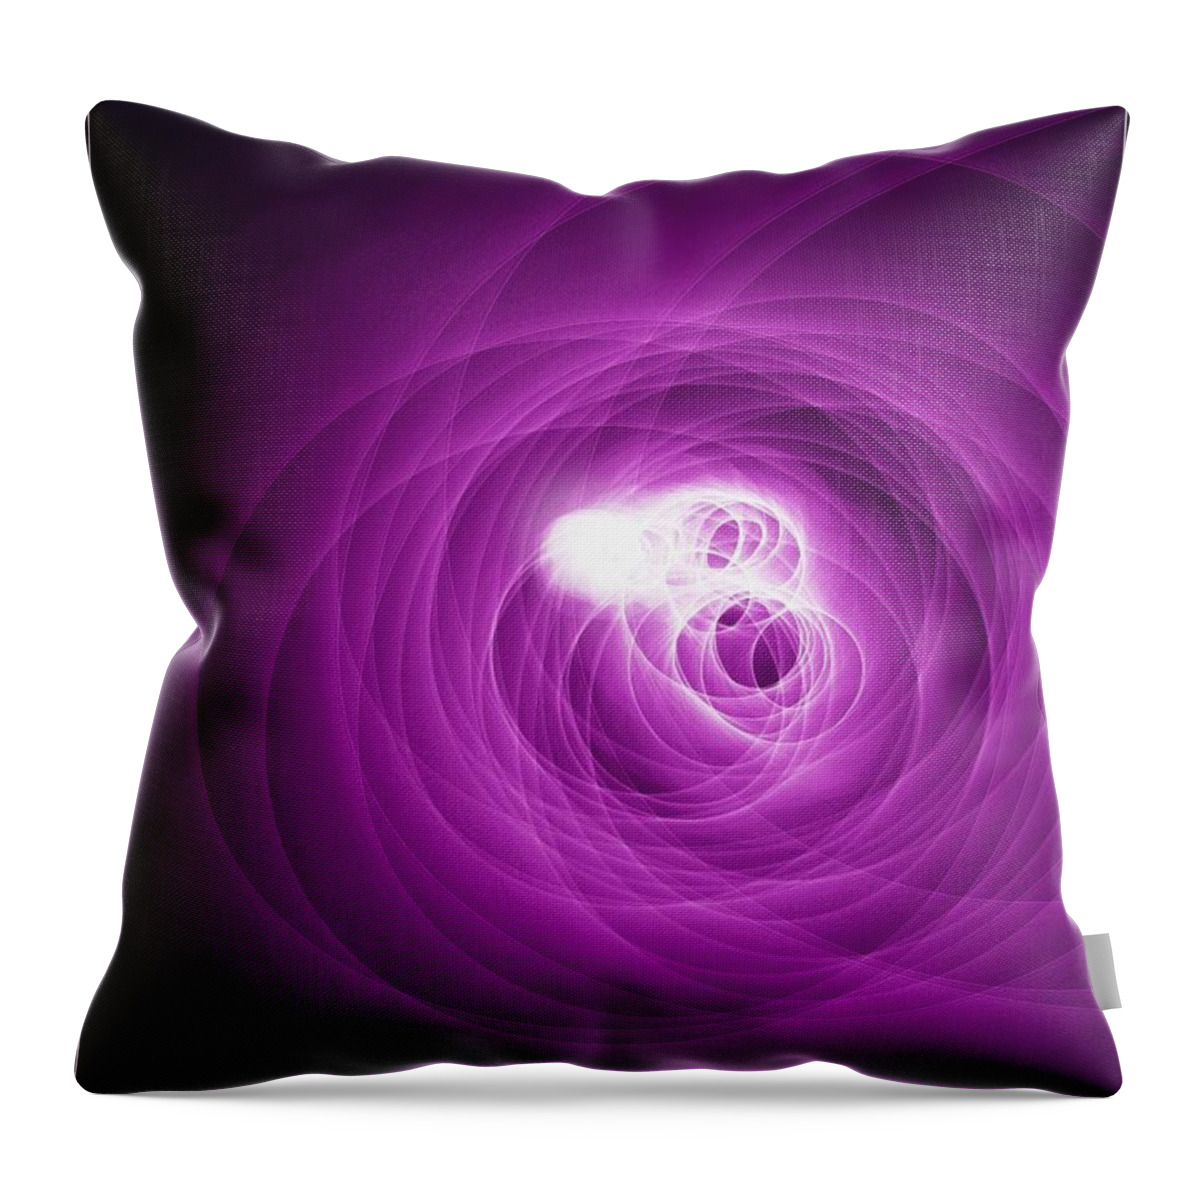 Spiritual Throw Pillow featuring the digital art The Arrival of Spirit by Carmen Cordova